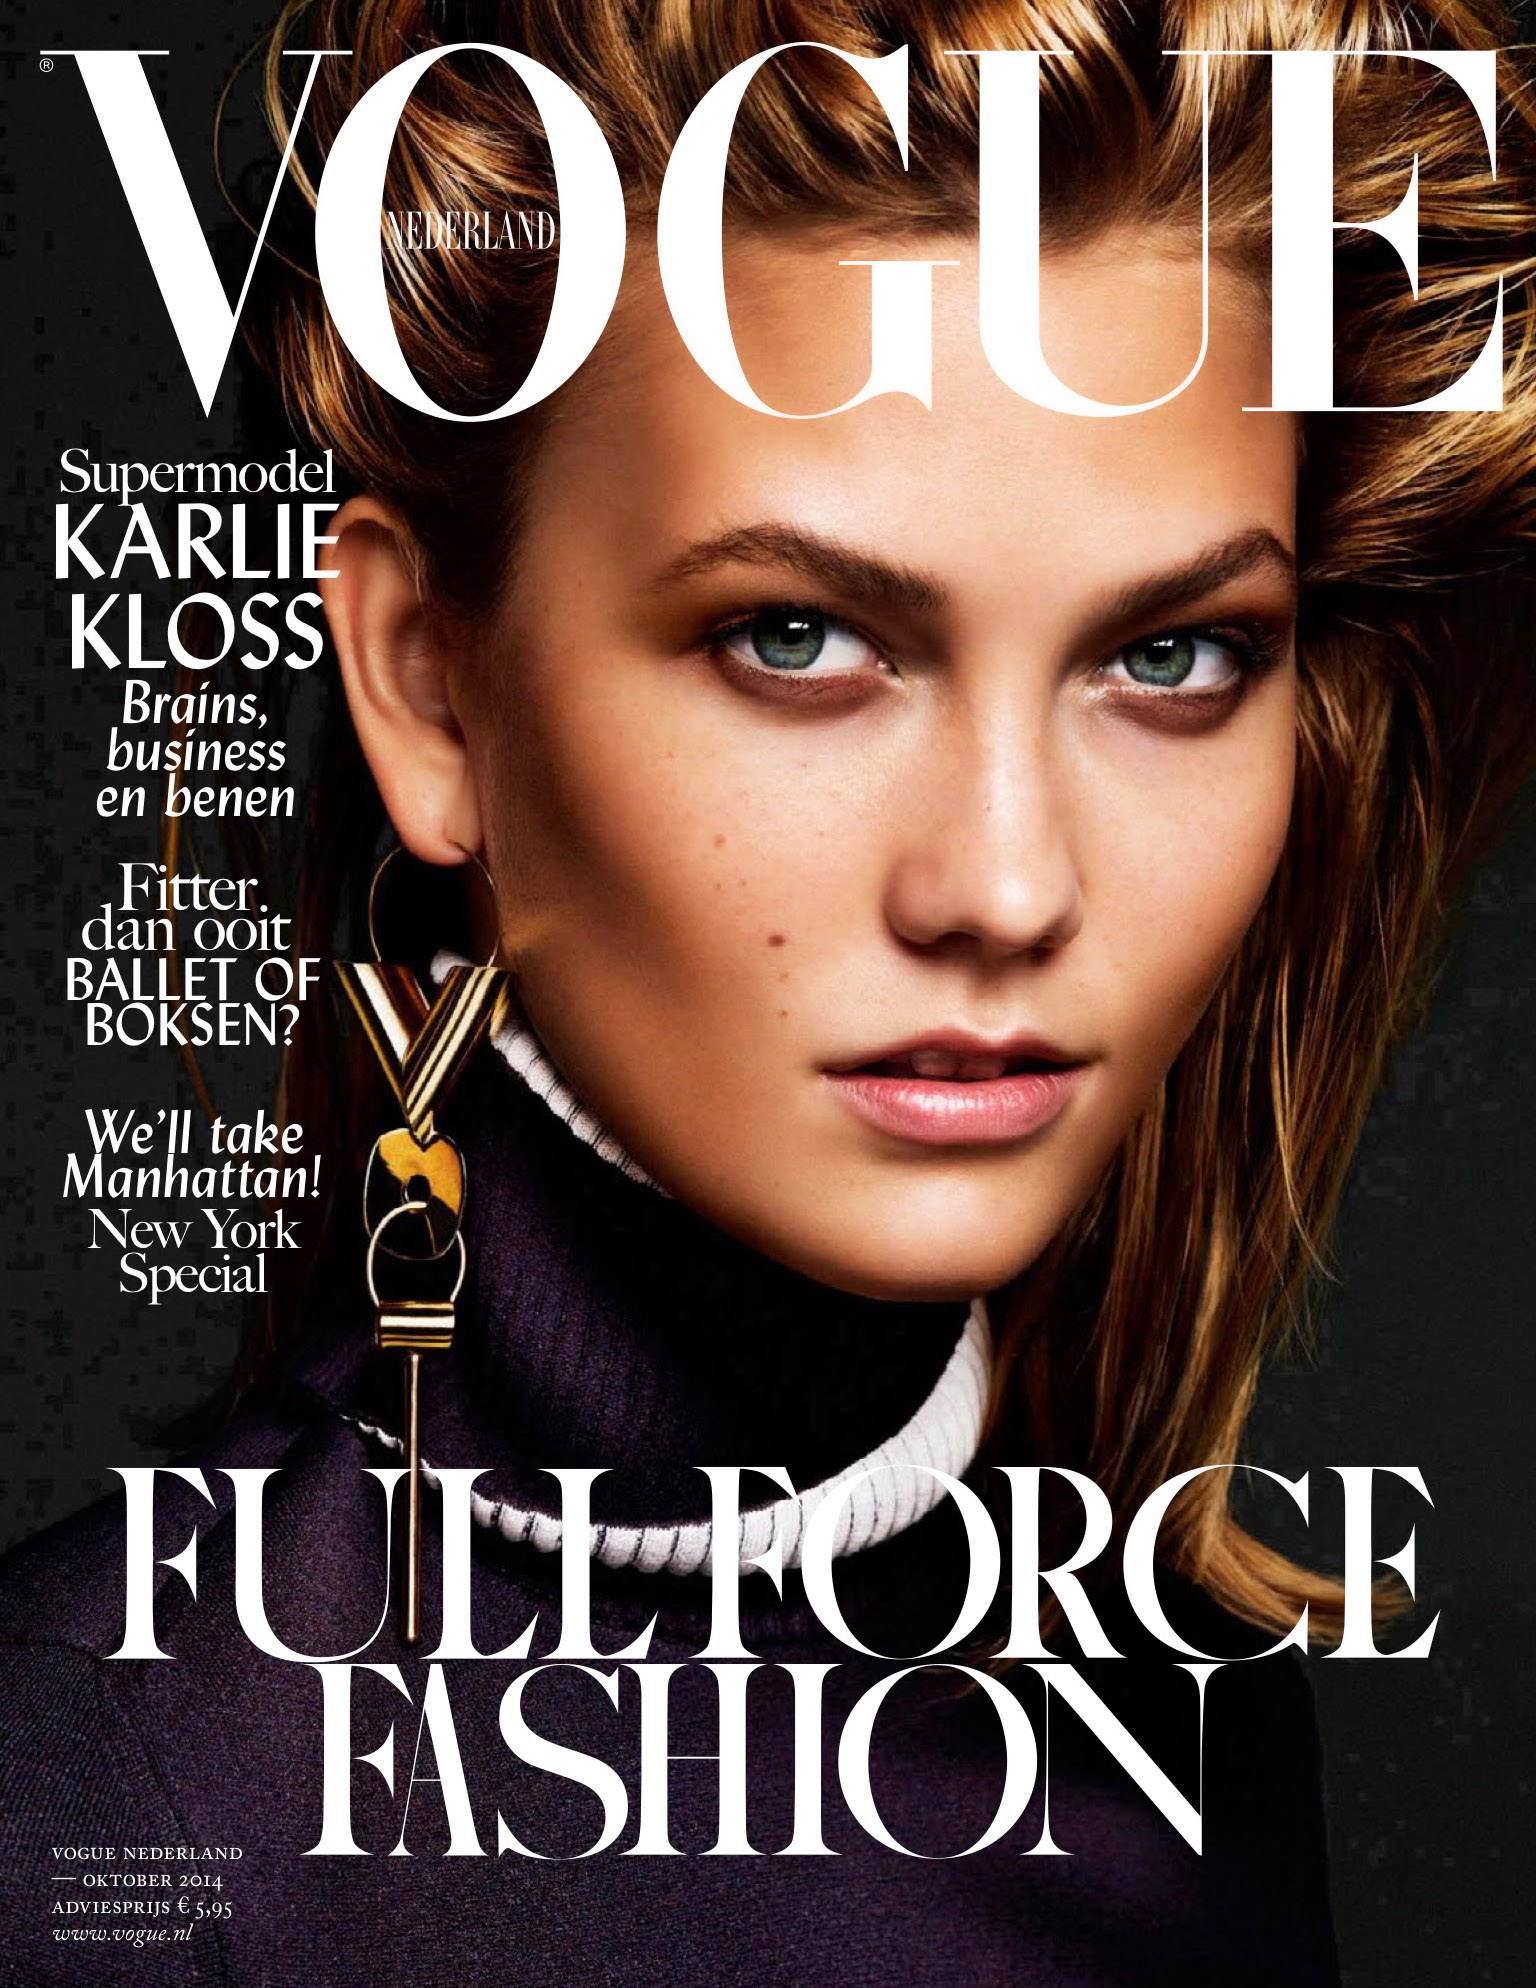 Журнал вог сайт. Karlie Kloss Vogue. Карли Клосс обложка Вог. Карли Клосс на обложке Vogue. Карли Клосс обложки журнала.